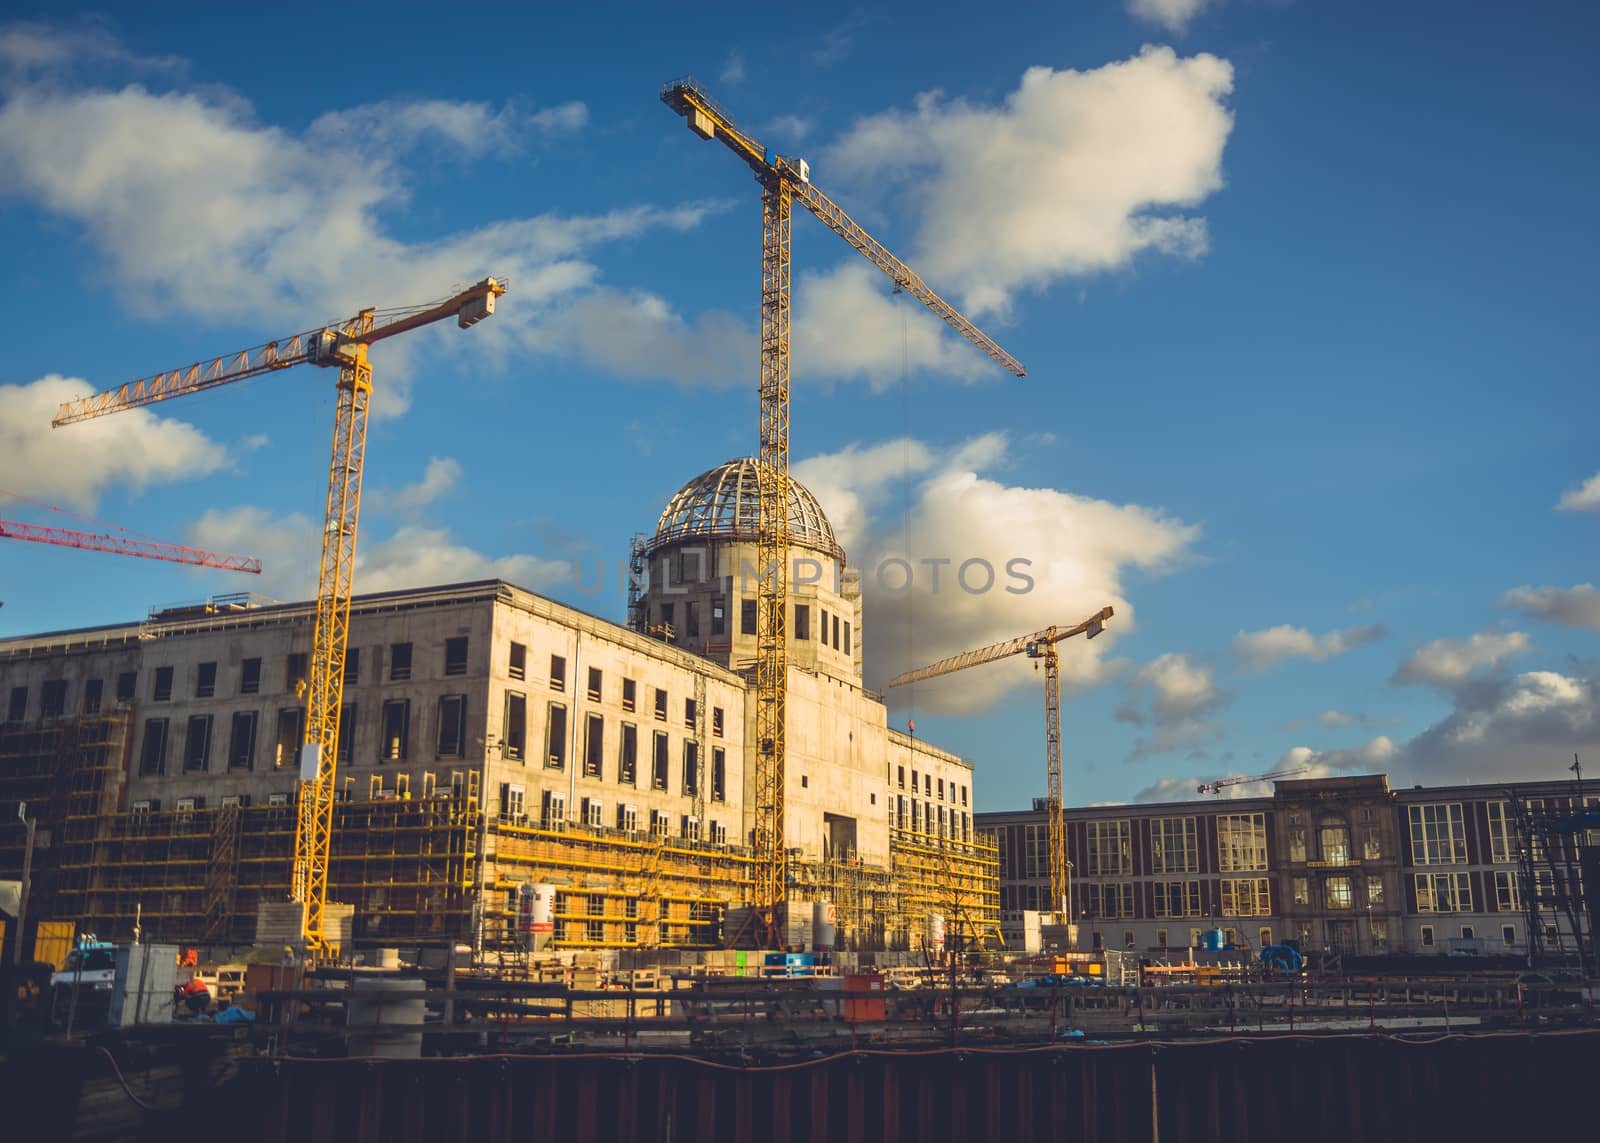 The new Stadtschloss being built in Berlin, Germany.